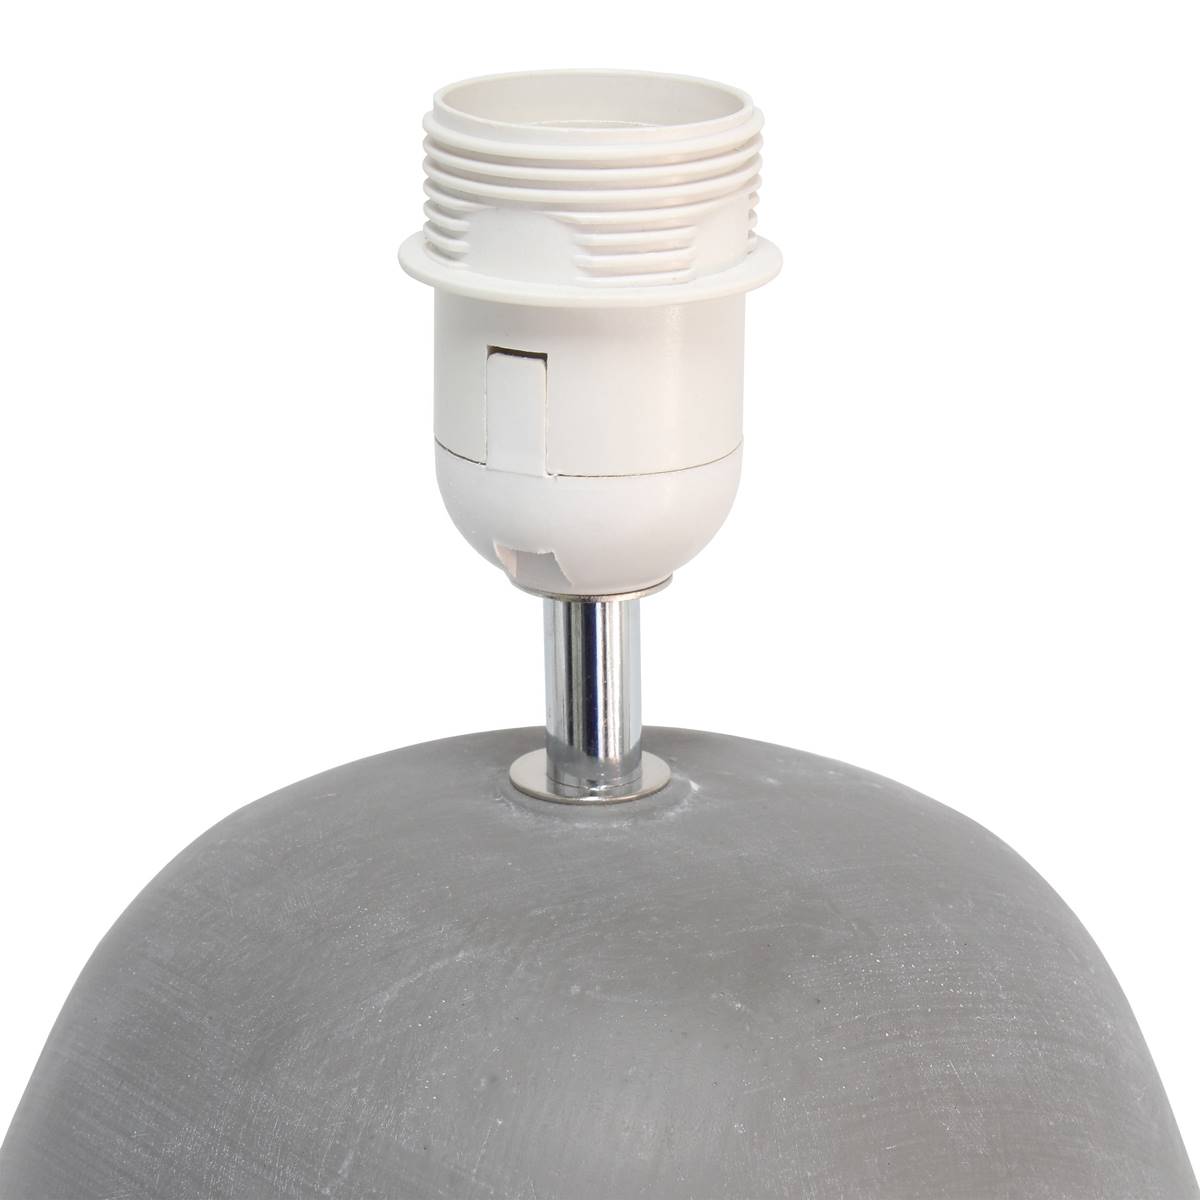 Simple Designs Round Concrete Table Lamp